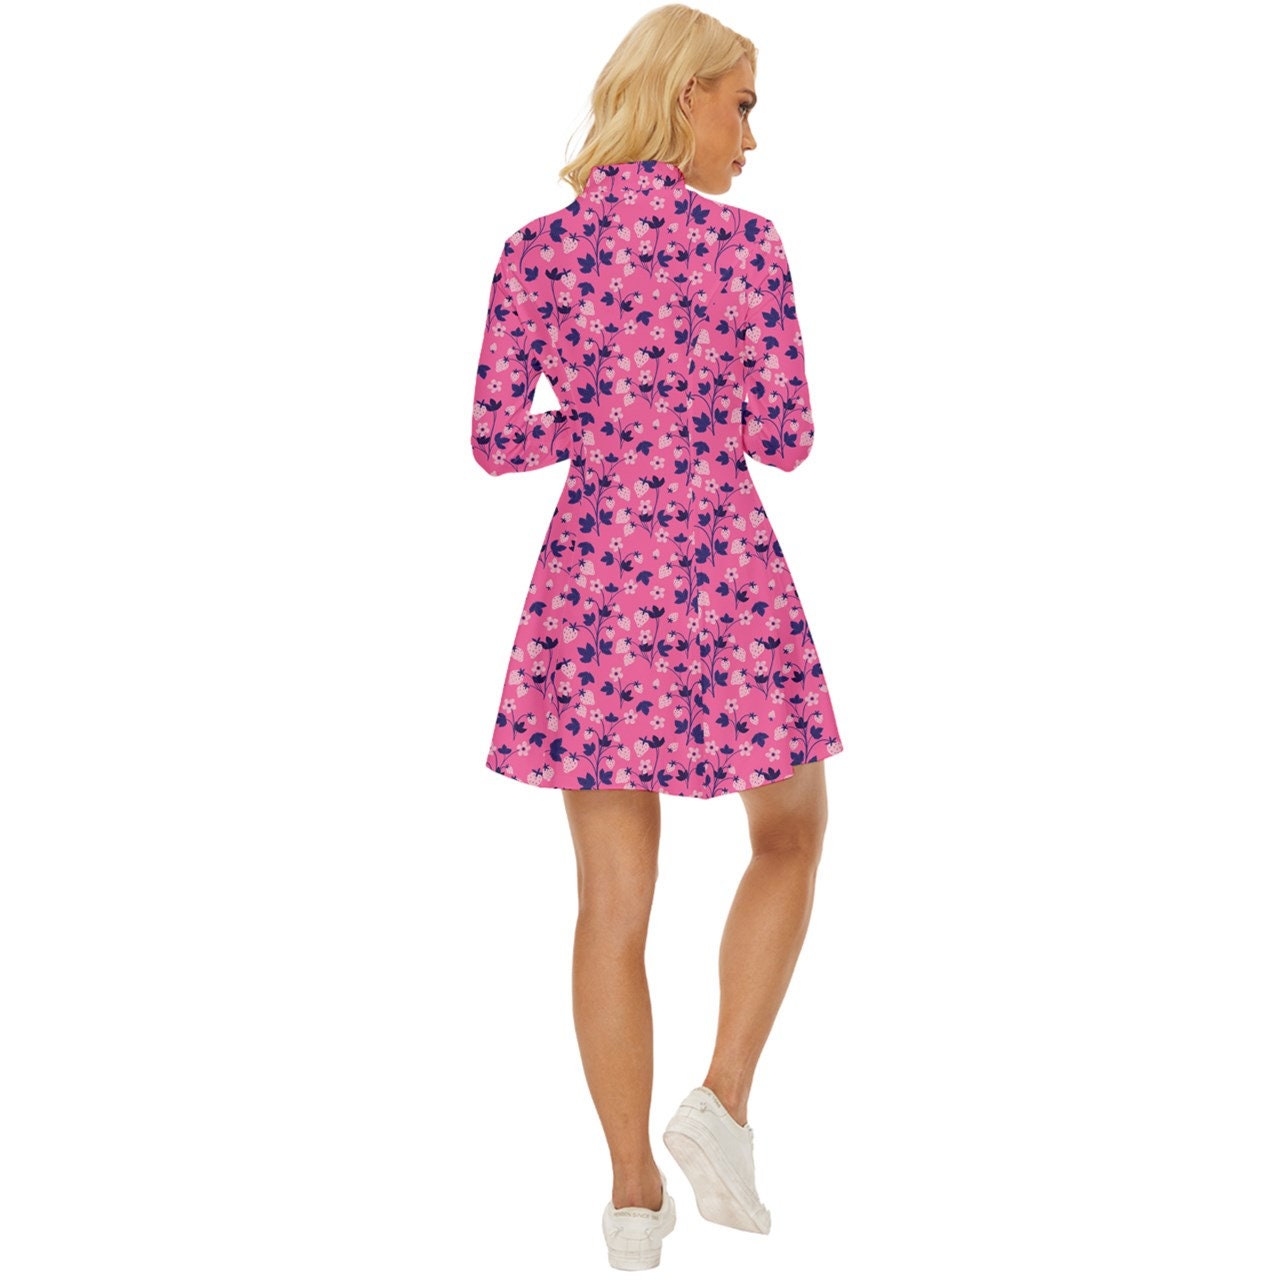 60s Dress Style, Mod Dress, Pink Mod Dress, Strawberry Dress, Turtle neck dress, GOGO Dress, 60s style dress, 60s mini dress, Retro Dress